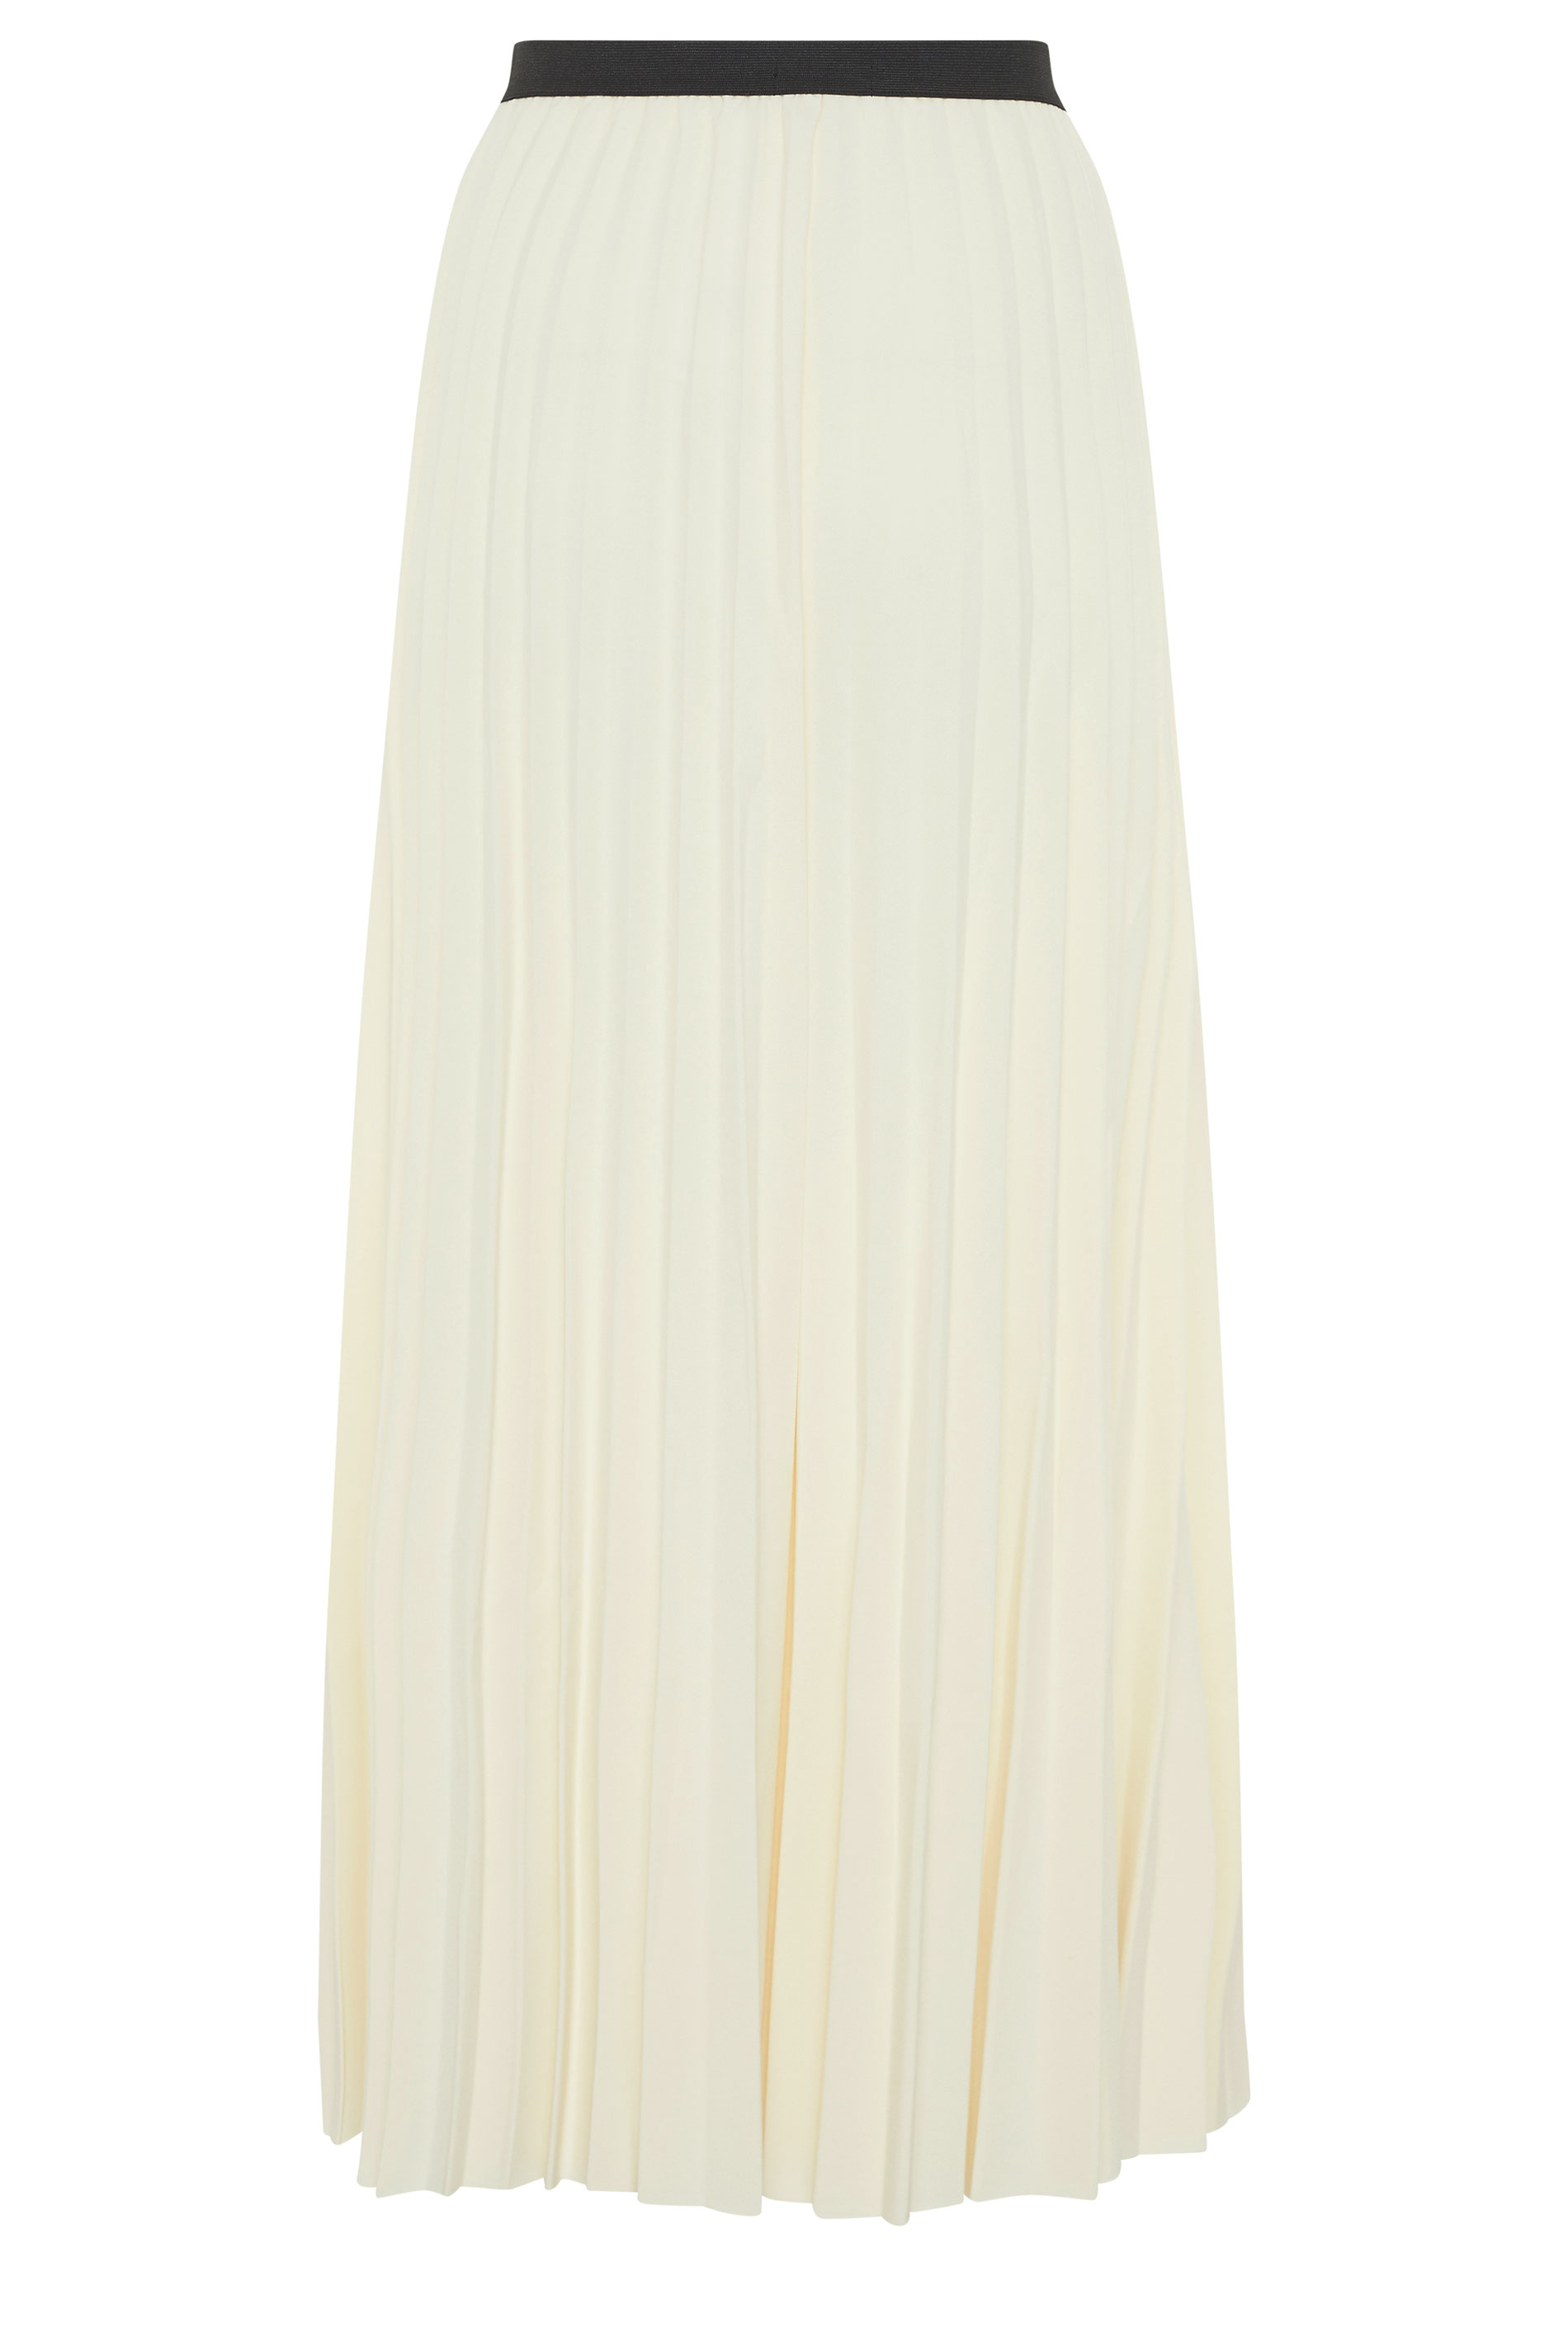 LTS Ivory Pleated Midi Skirt | Long Tall Sally